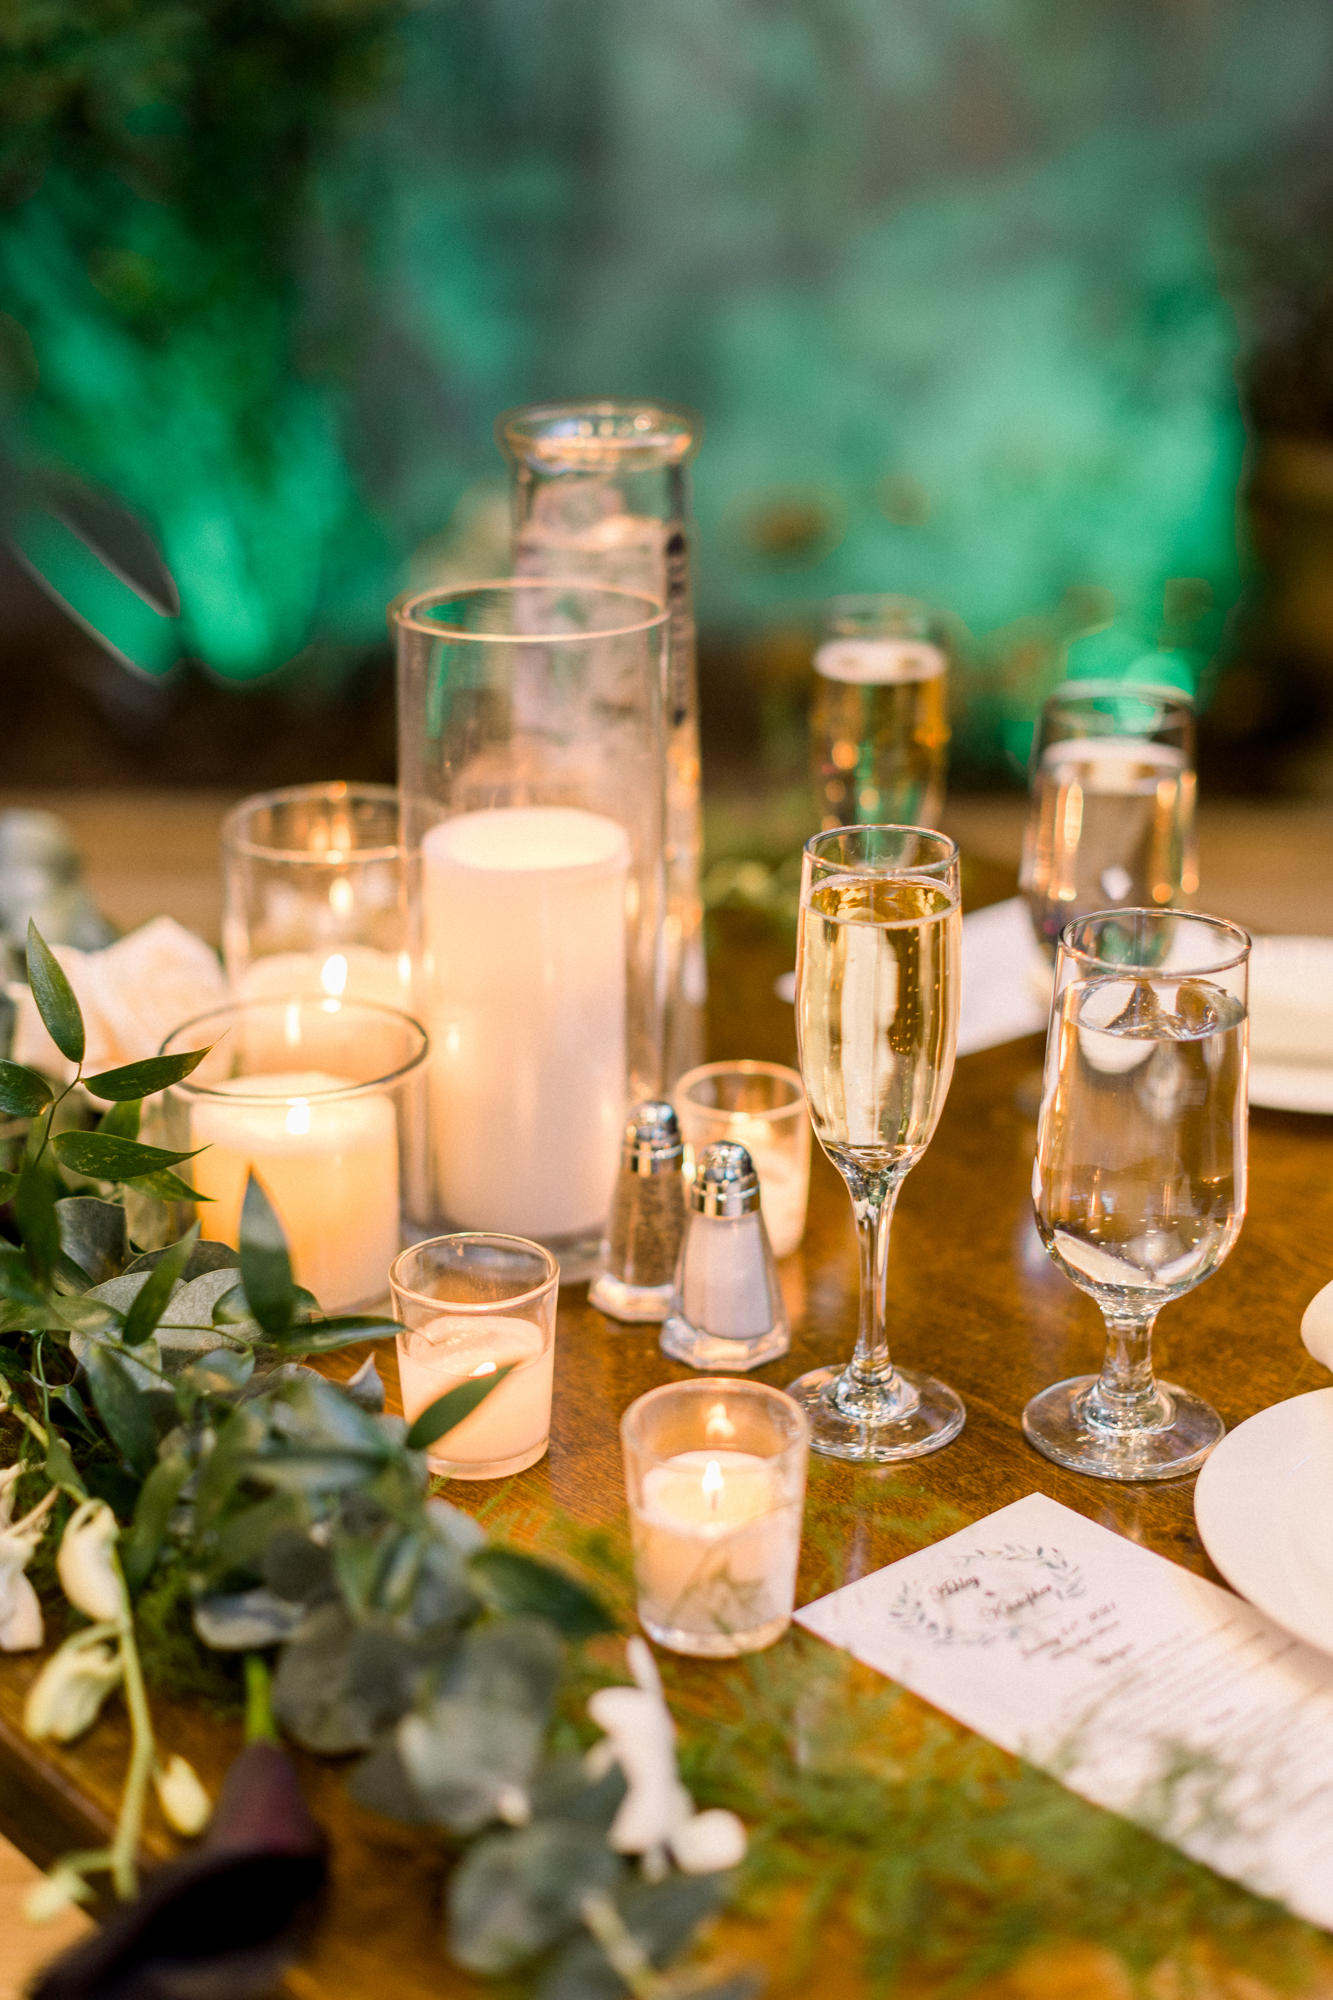 MyMoon wedding reception decor on the tables